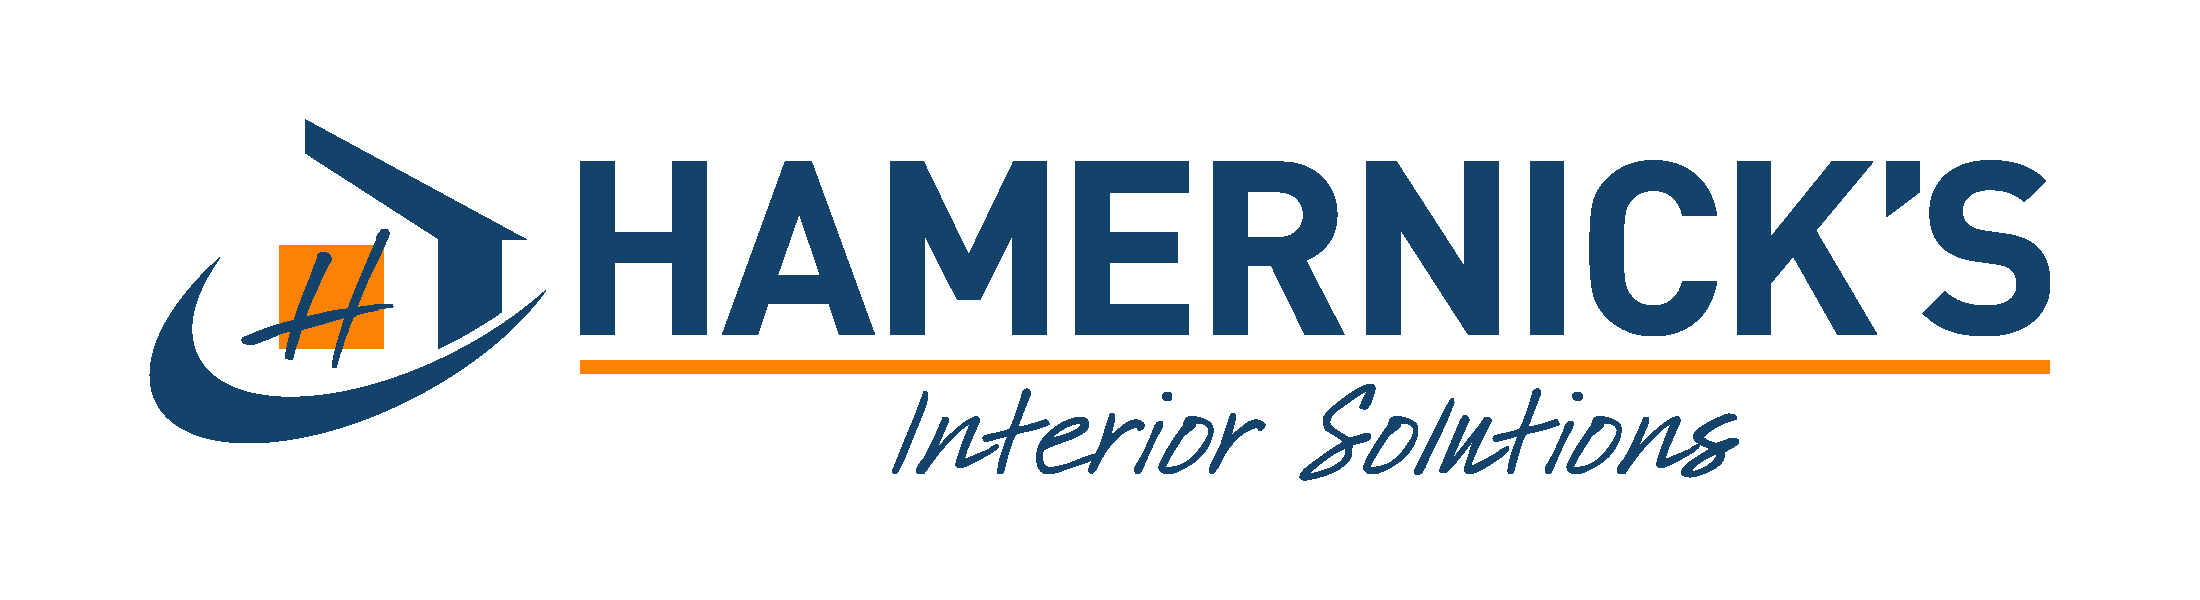 Hamernick_s Logo - High Res